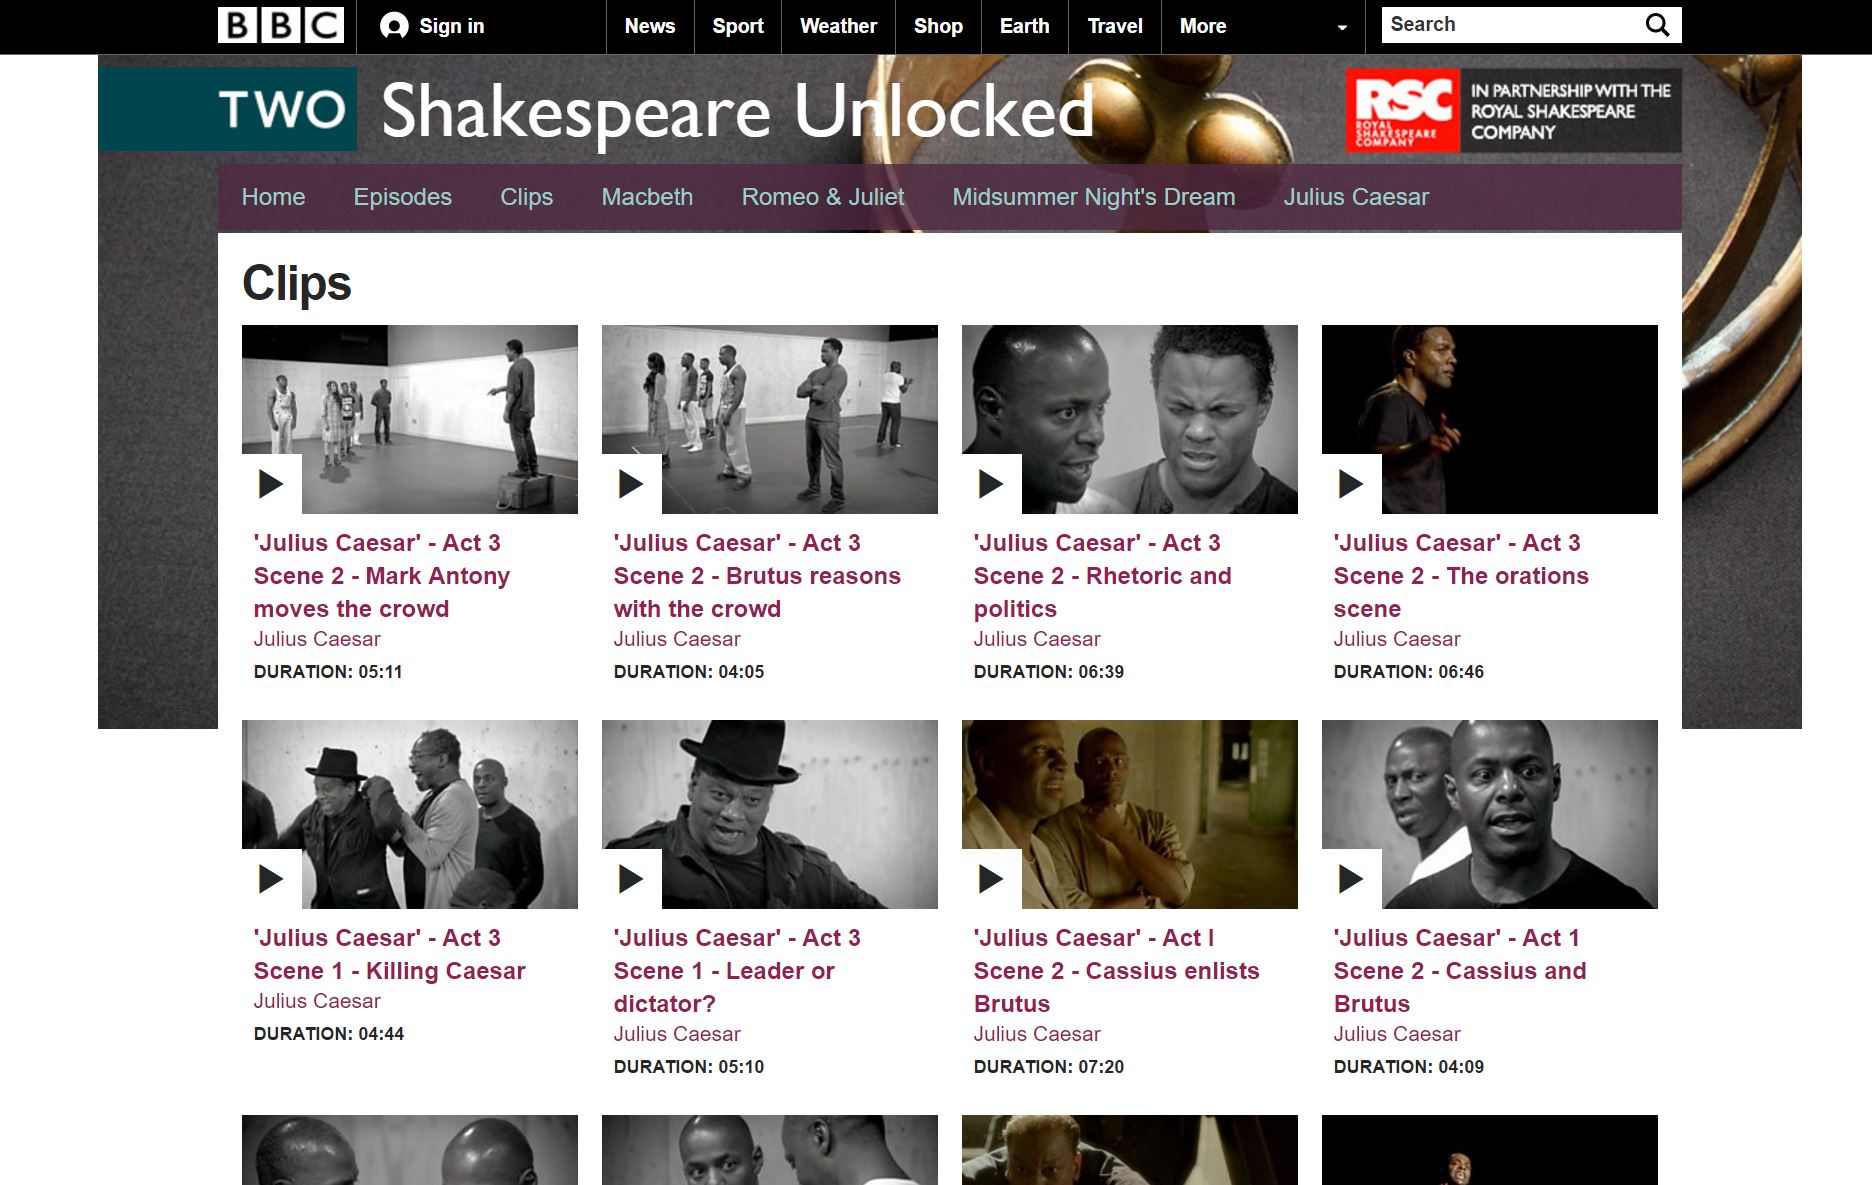 BBC Two Shakespeare unlocked